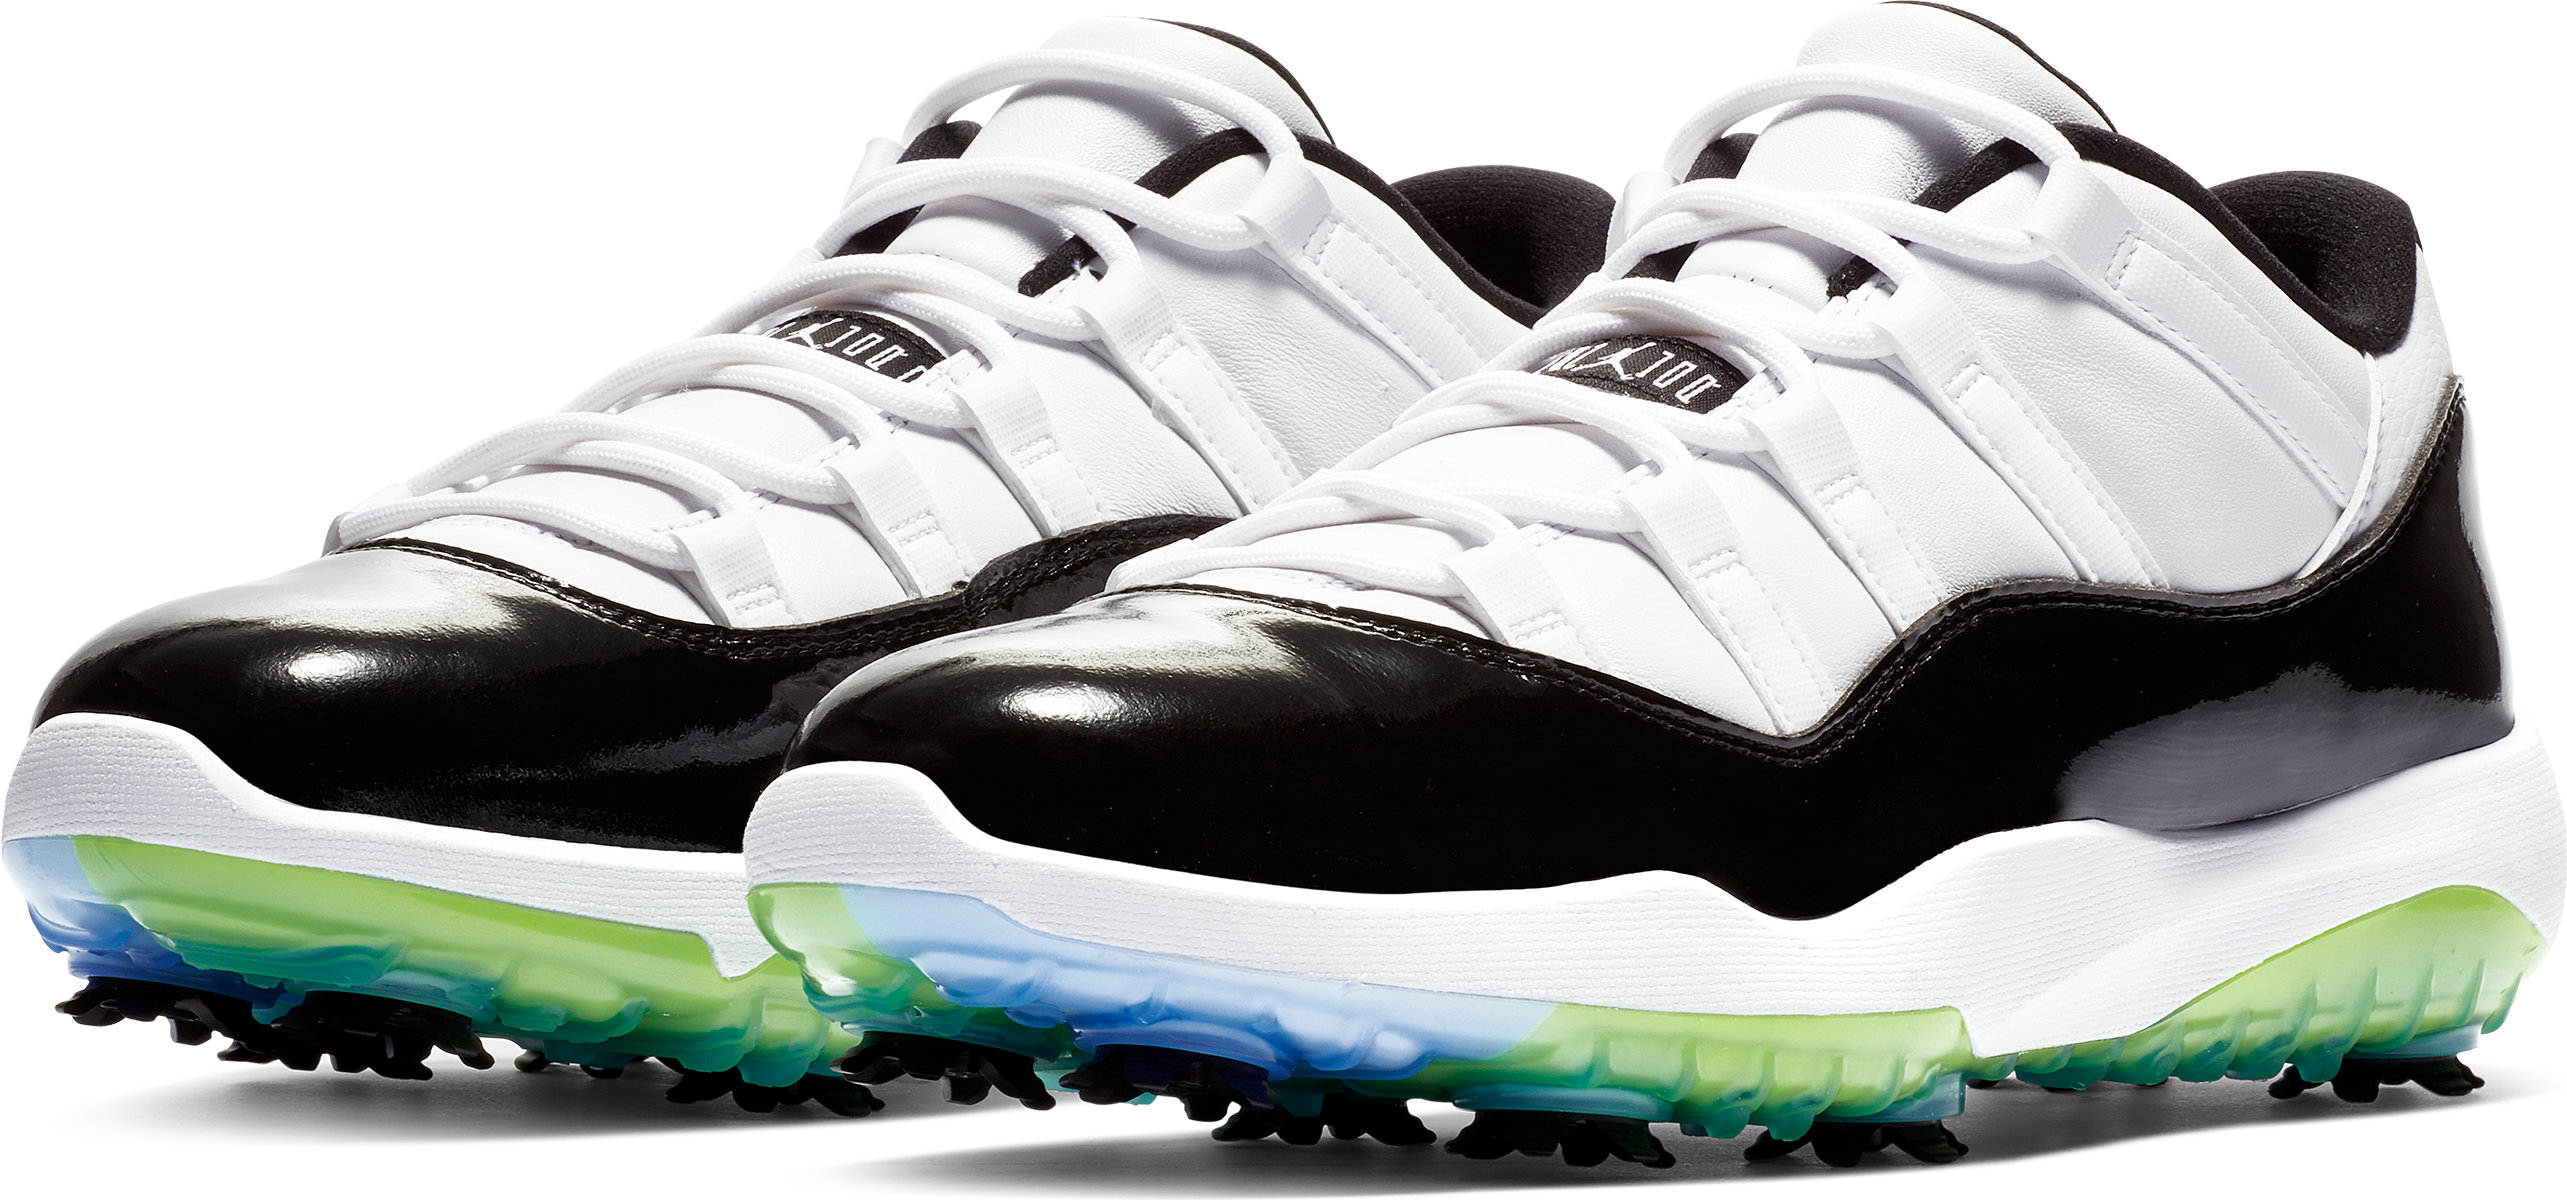 Nike Air Jordan 11 Concord golf shoe 